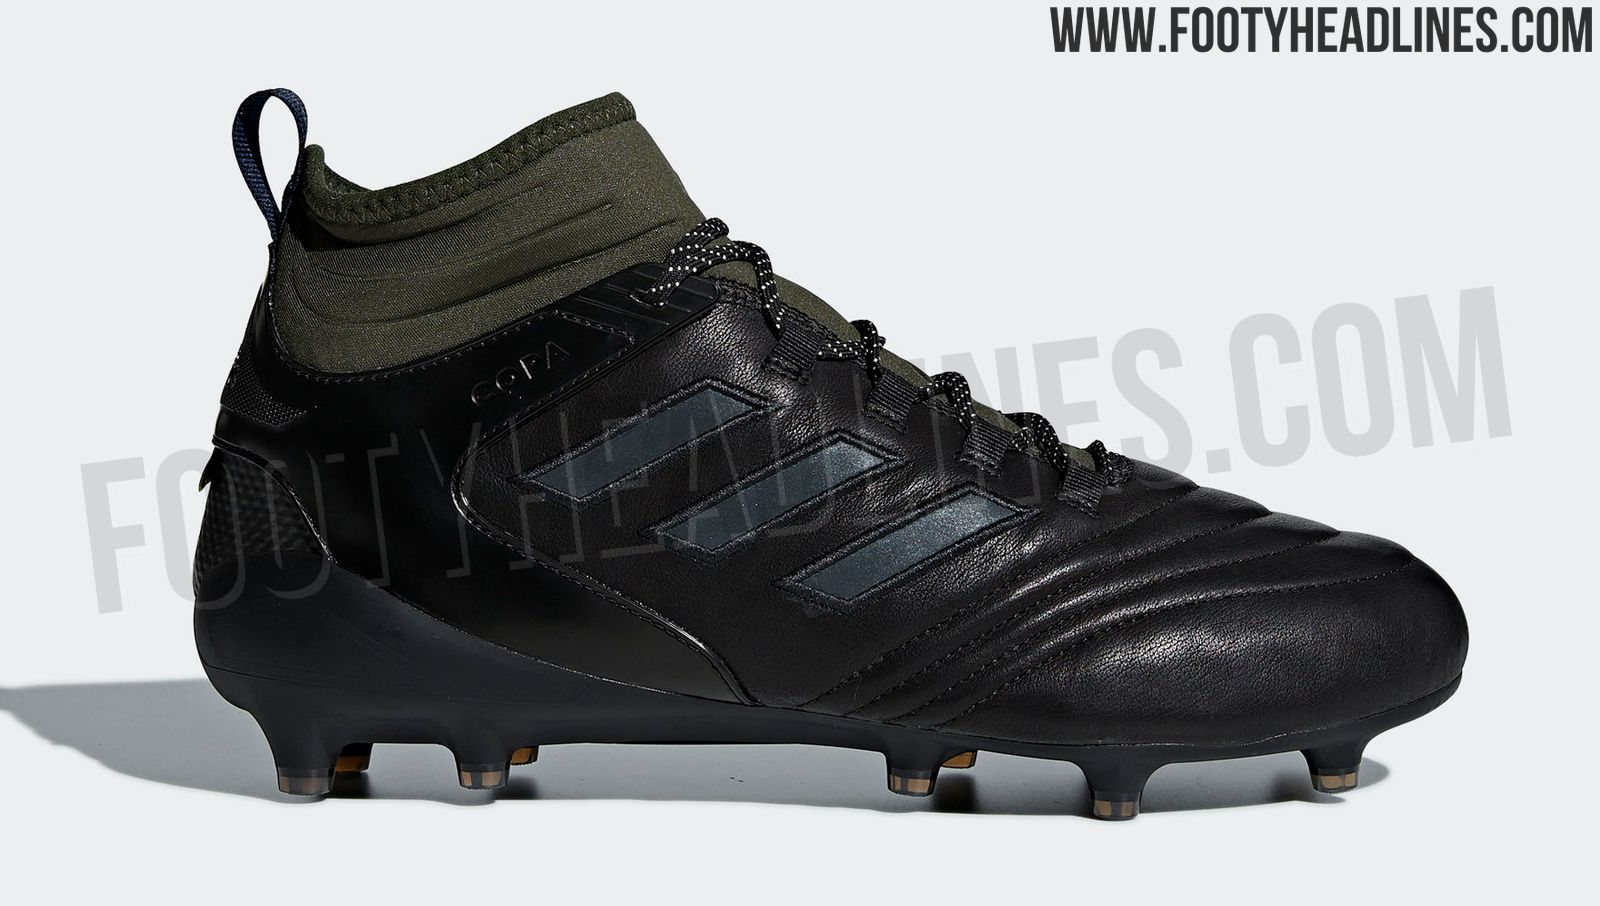 adidas gore tex football boots